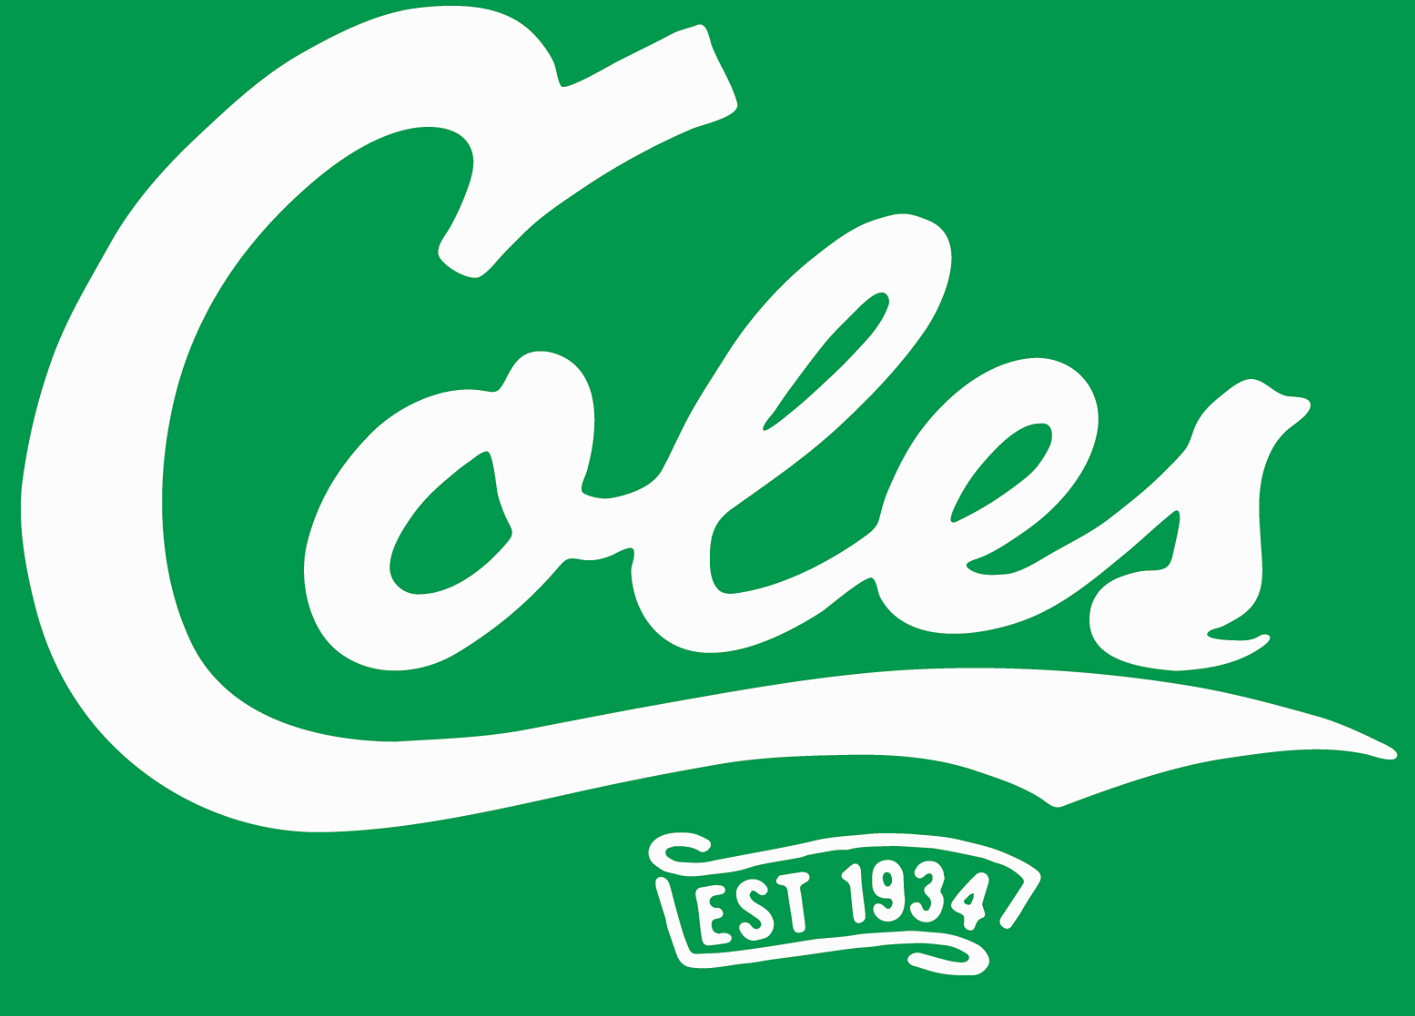 Cole's Buffalo logo